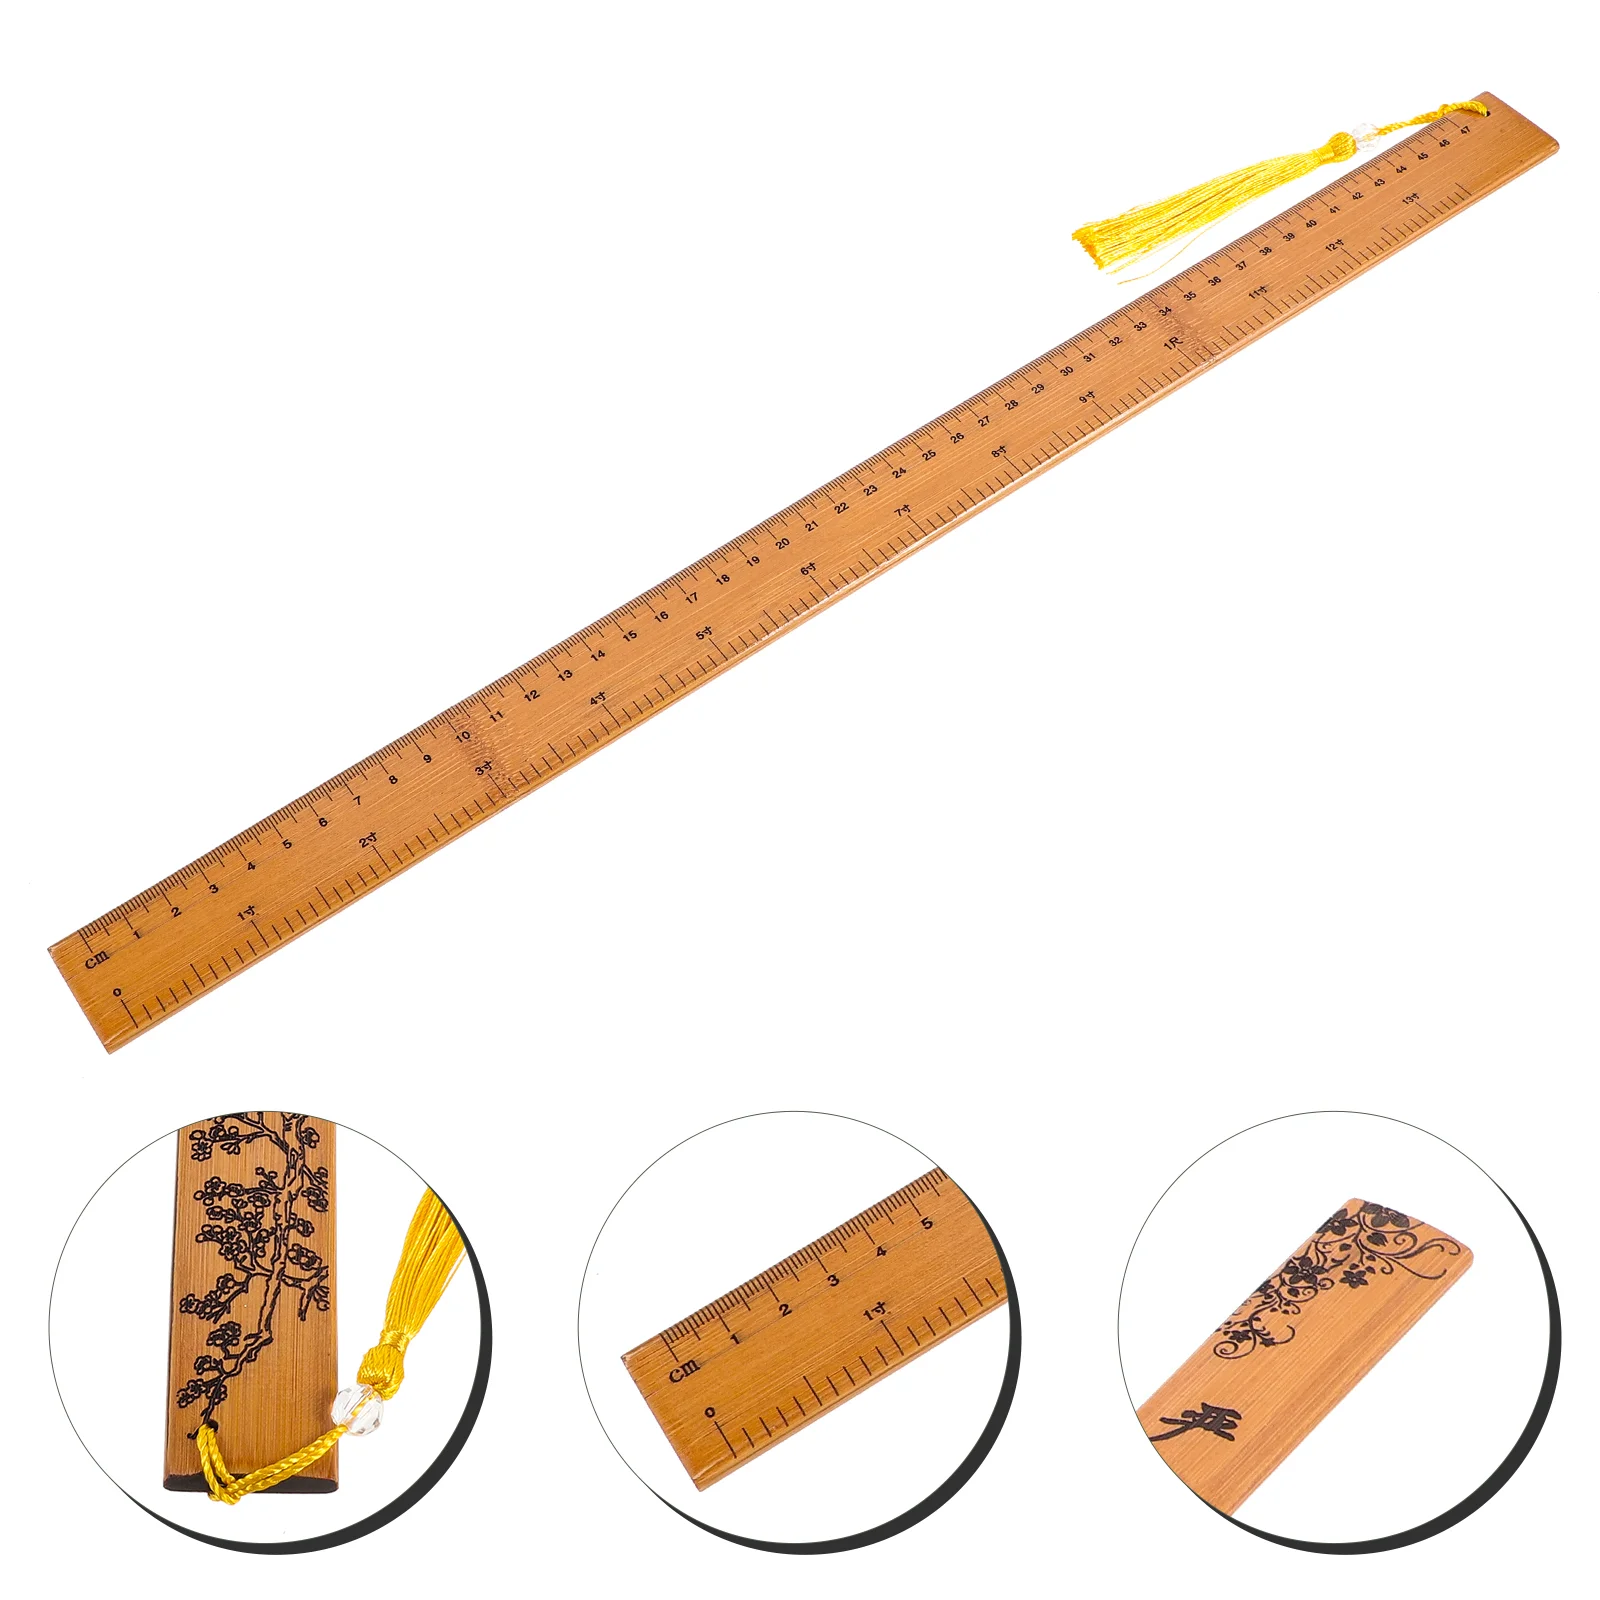 

Wooden Kids Ruler Measuring Bamboo Ruler Precise Student Ruler School Accessory Kids School Teaching Home Measuring Tool